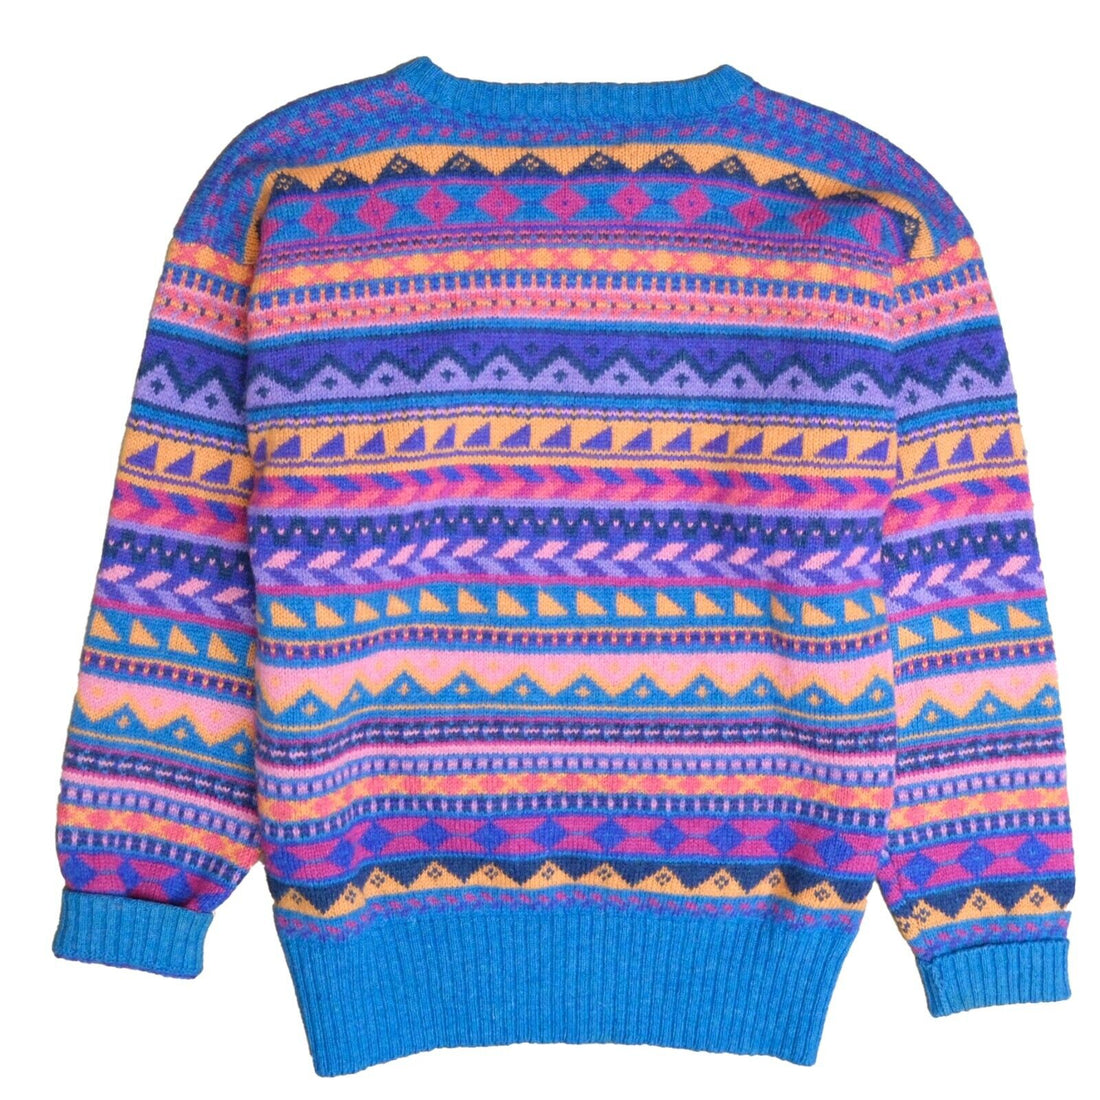 Vintage Chaps Ralph Lauren Wool Knit Crewneck Sweater Size Medium